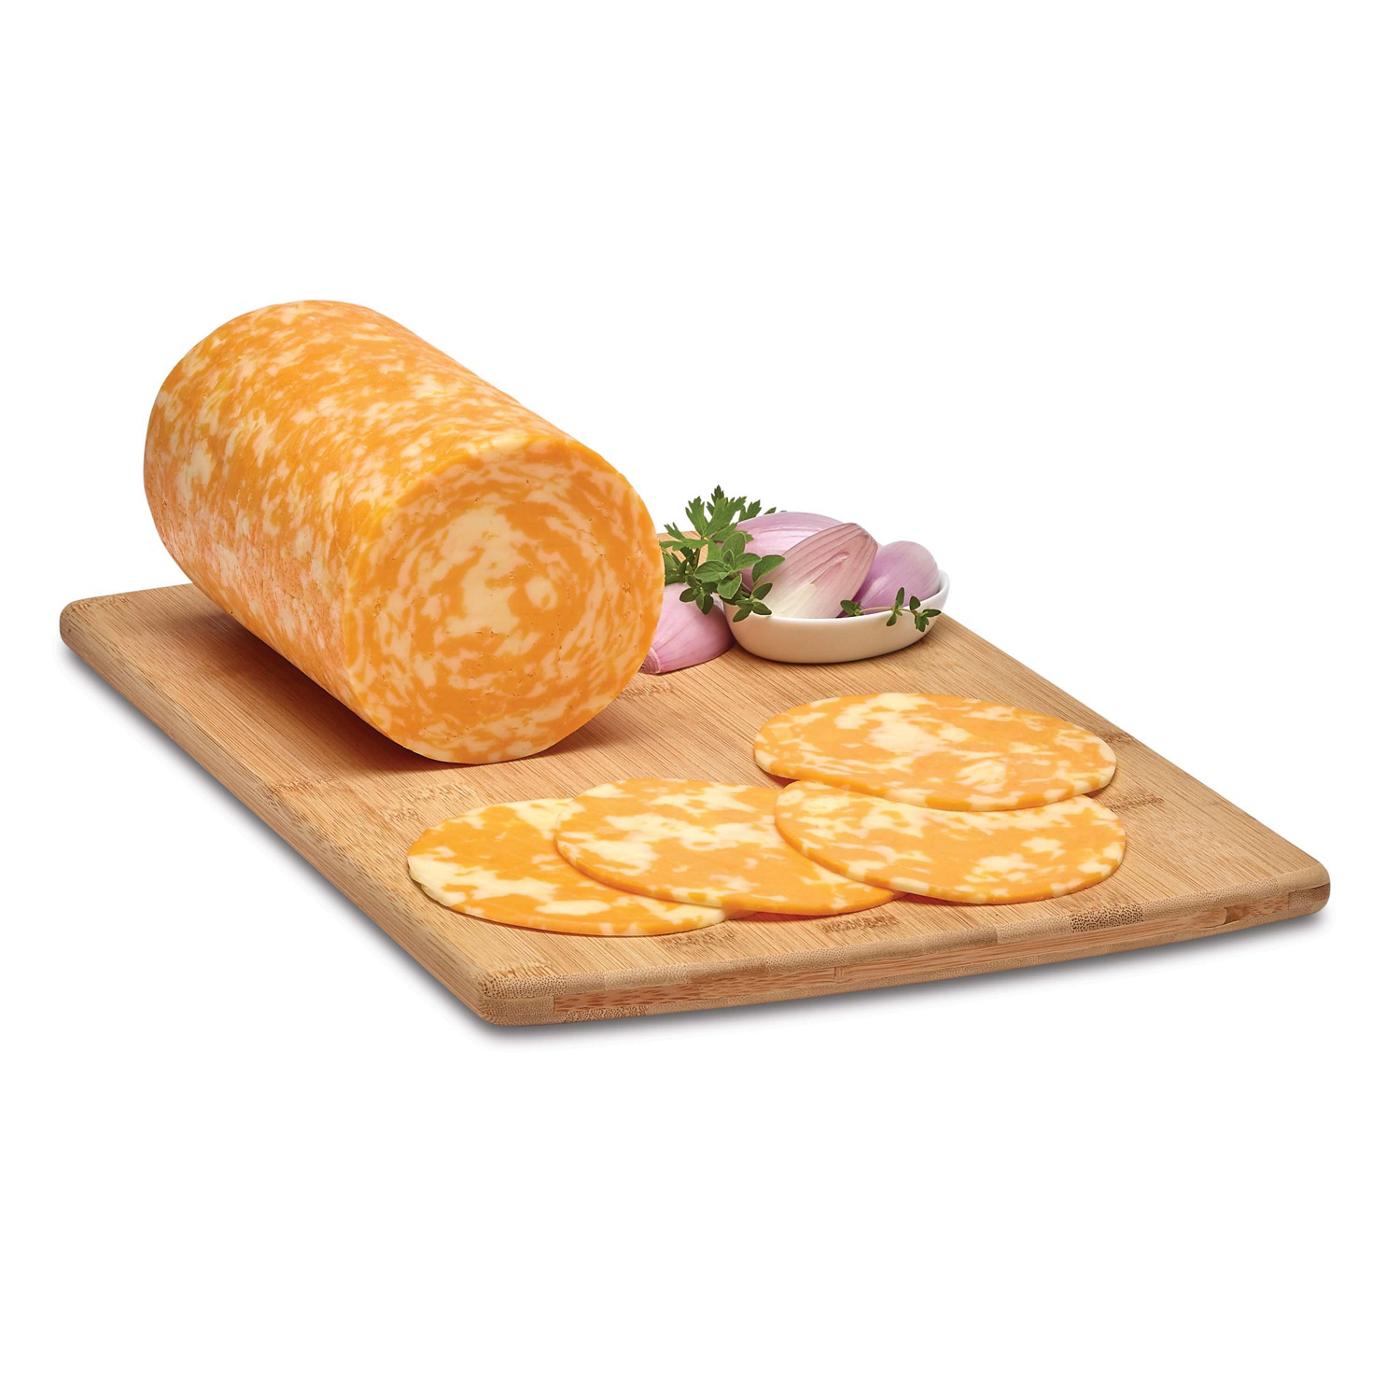 H-E-B Deli Colby Jack Cheese, Custom Sliced; image 1 of 3